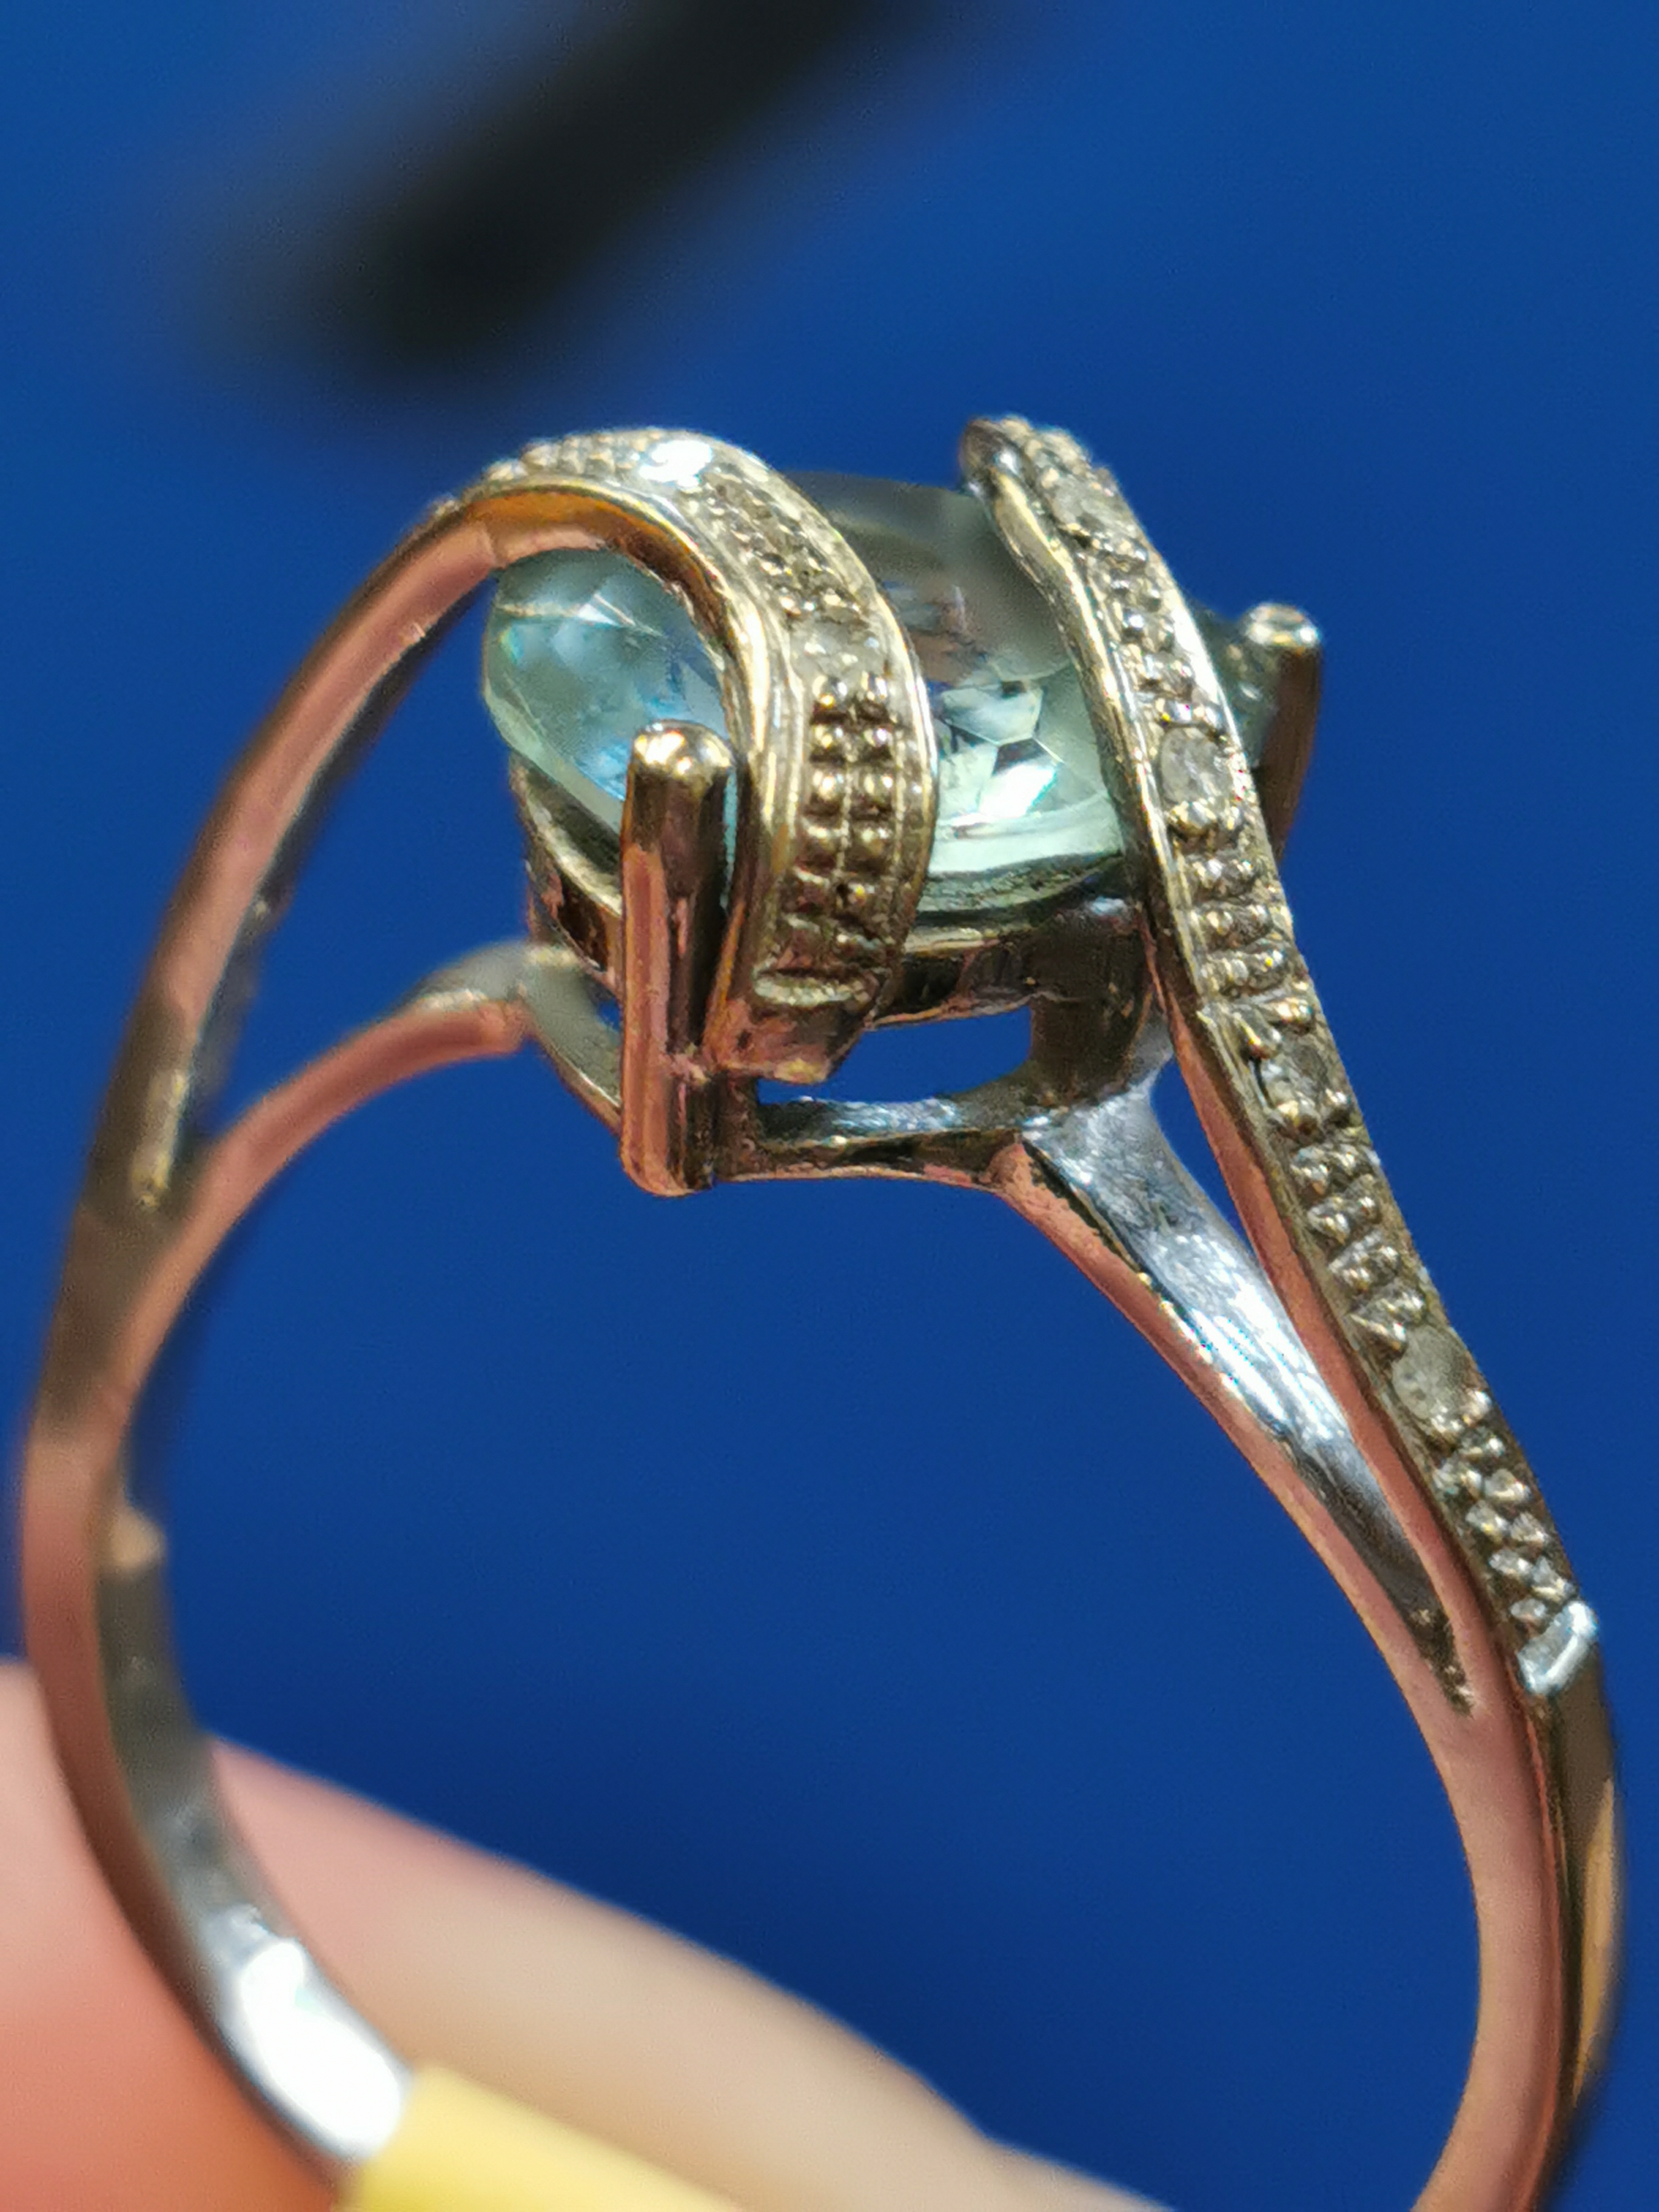 9ct Gold Twist Ring w/Aquamarine, size P - Image 2 of 2